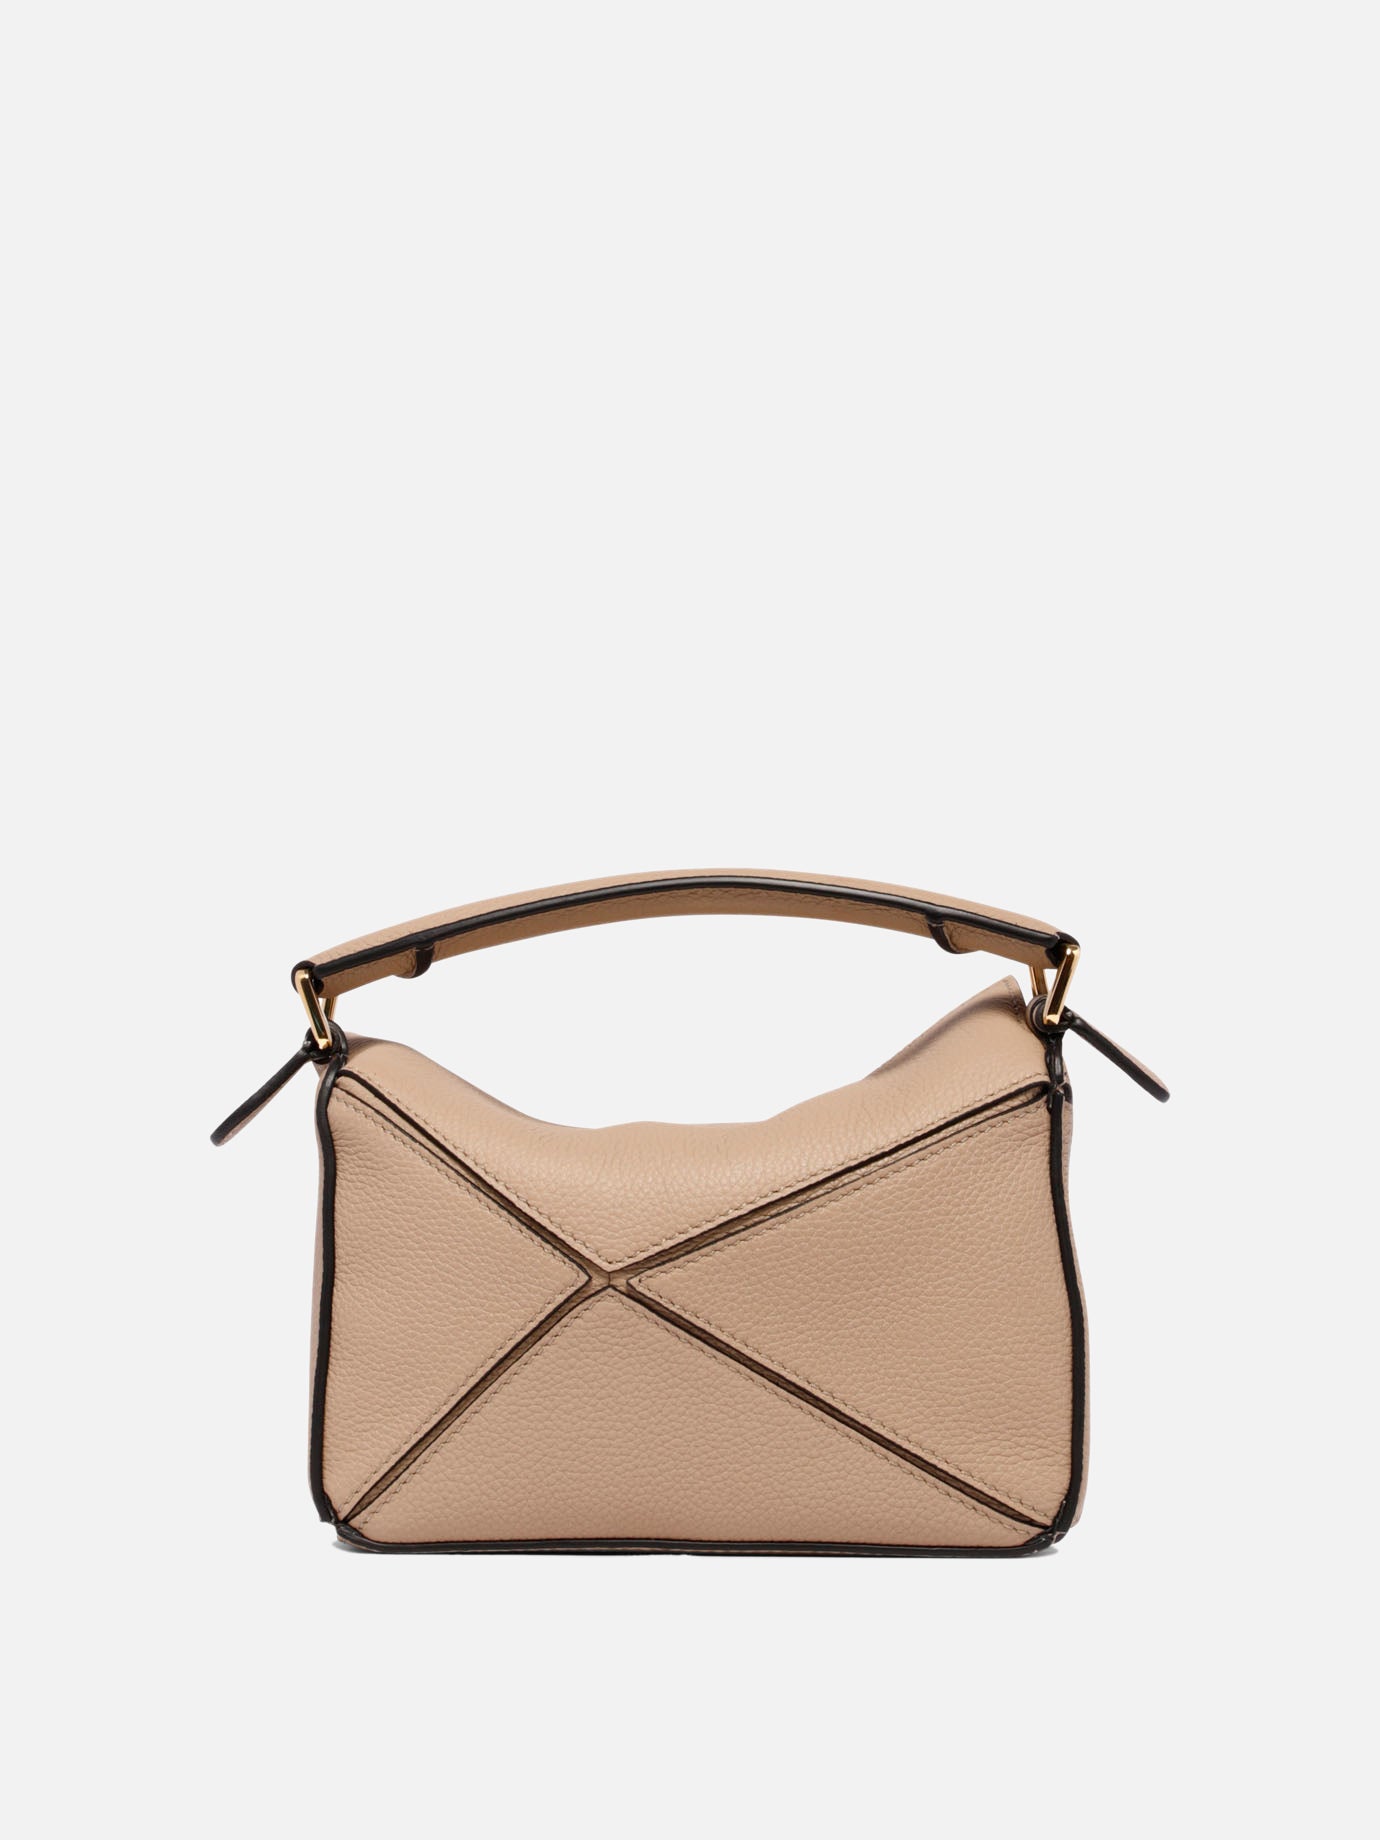 "Mini Puzzle" handbag